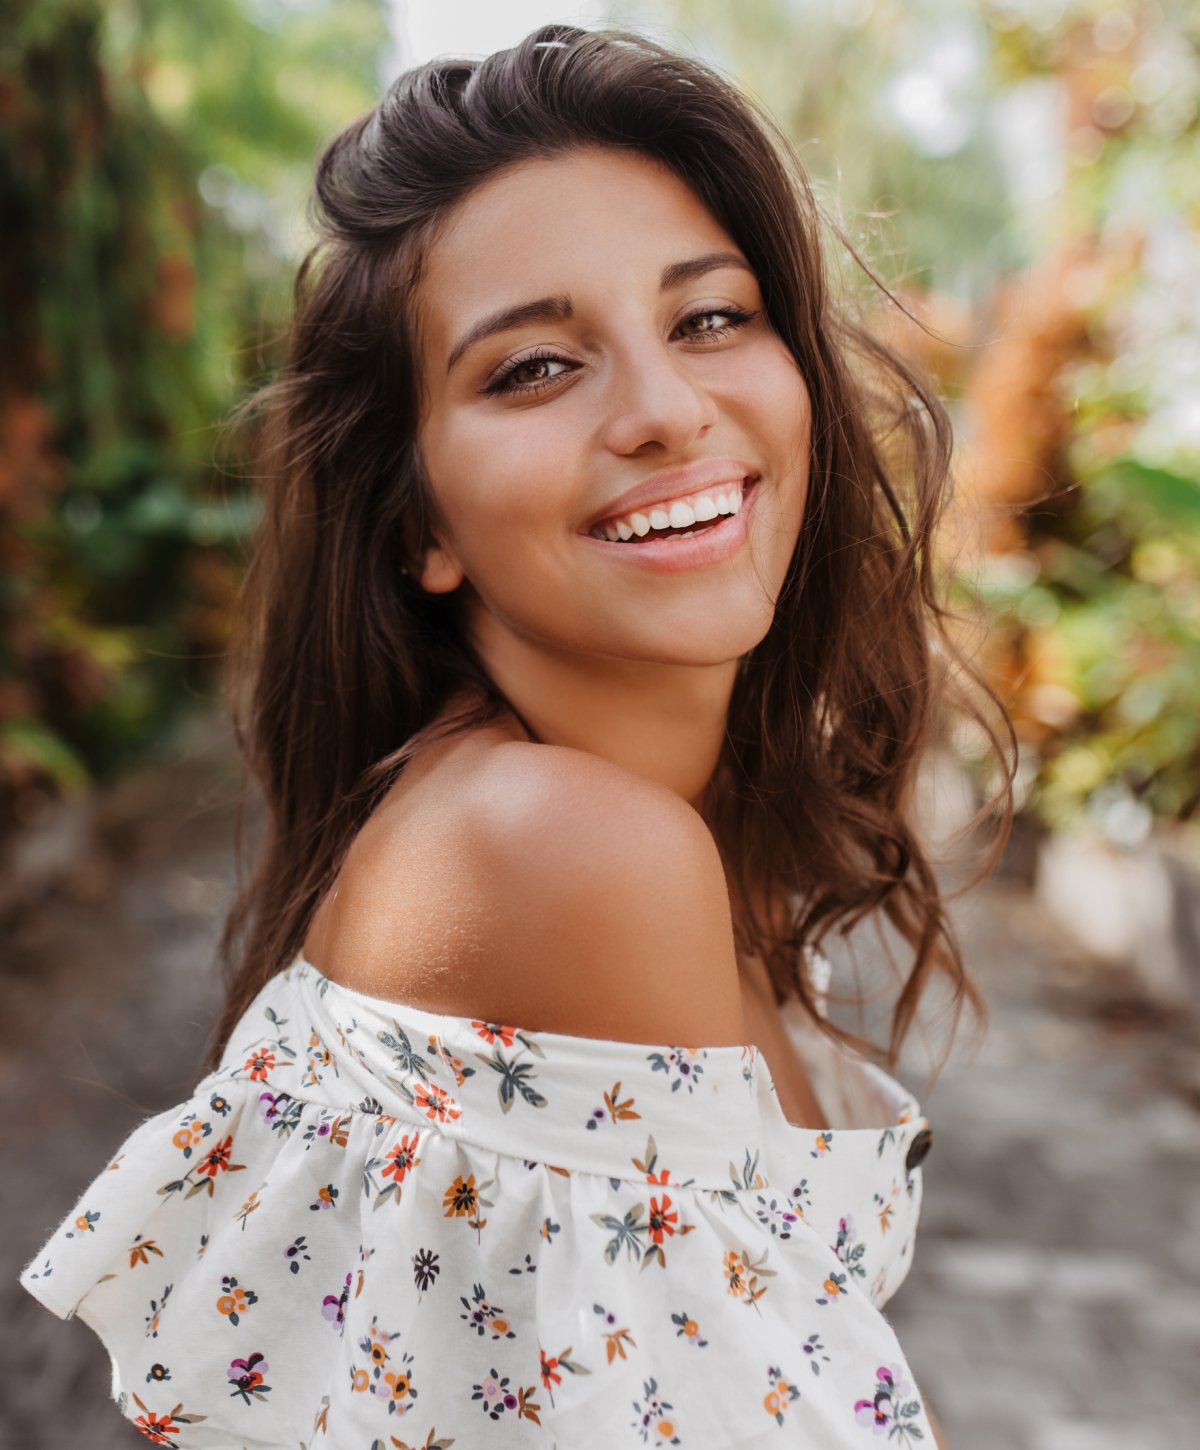 Restylane Lyft Tampa model smiling